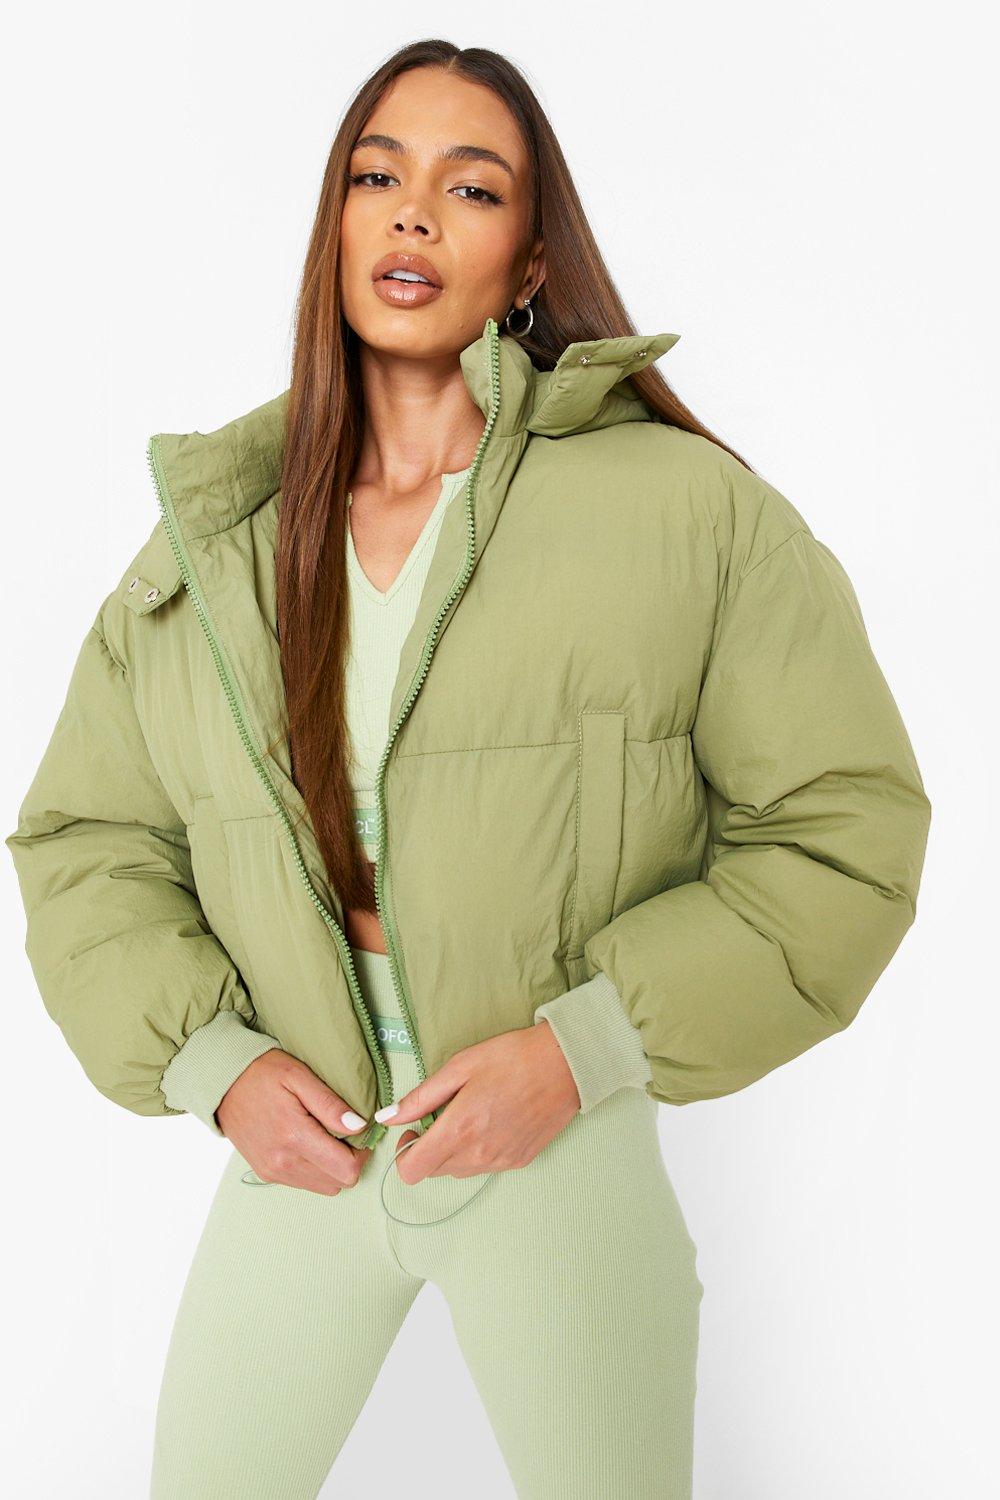 WOTOZR Women's Oversized Hooded Puffer Jacket